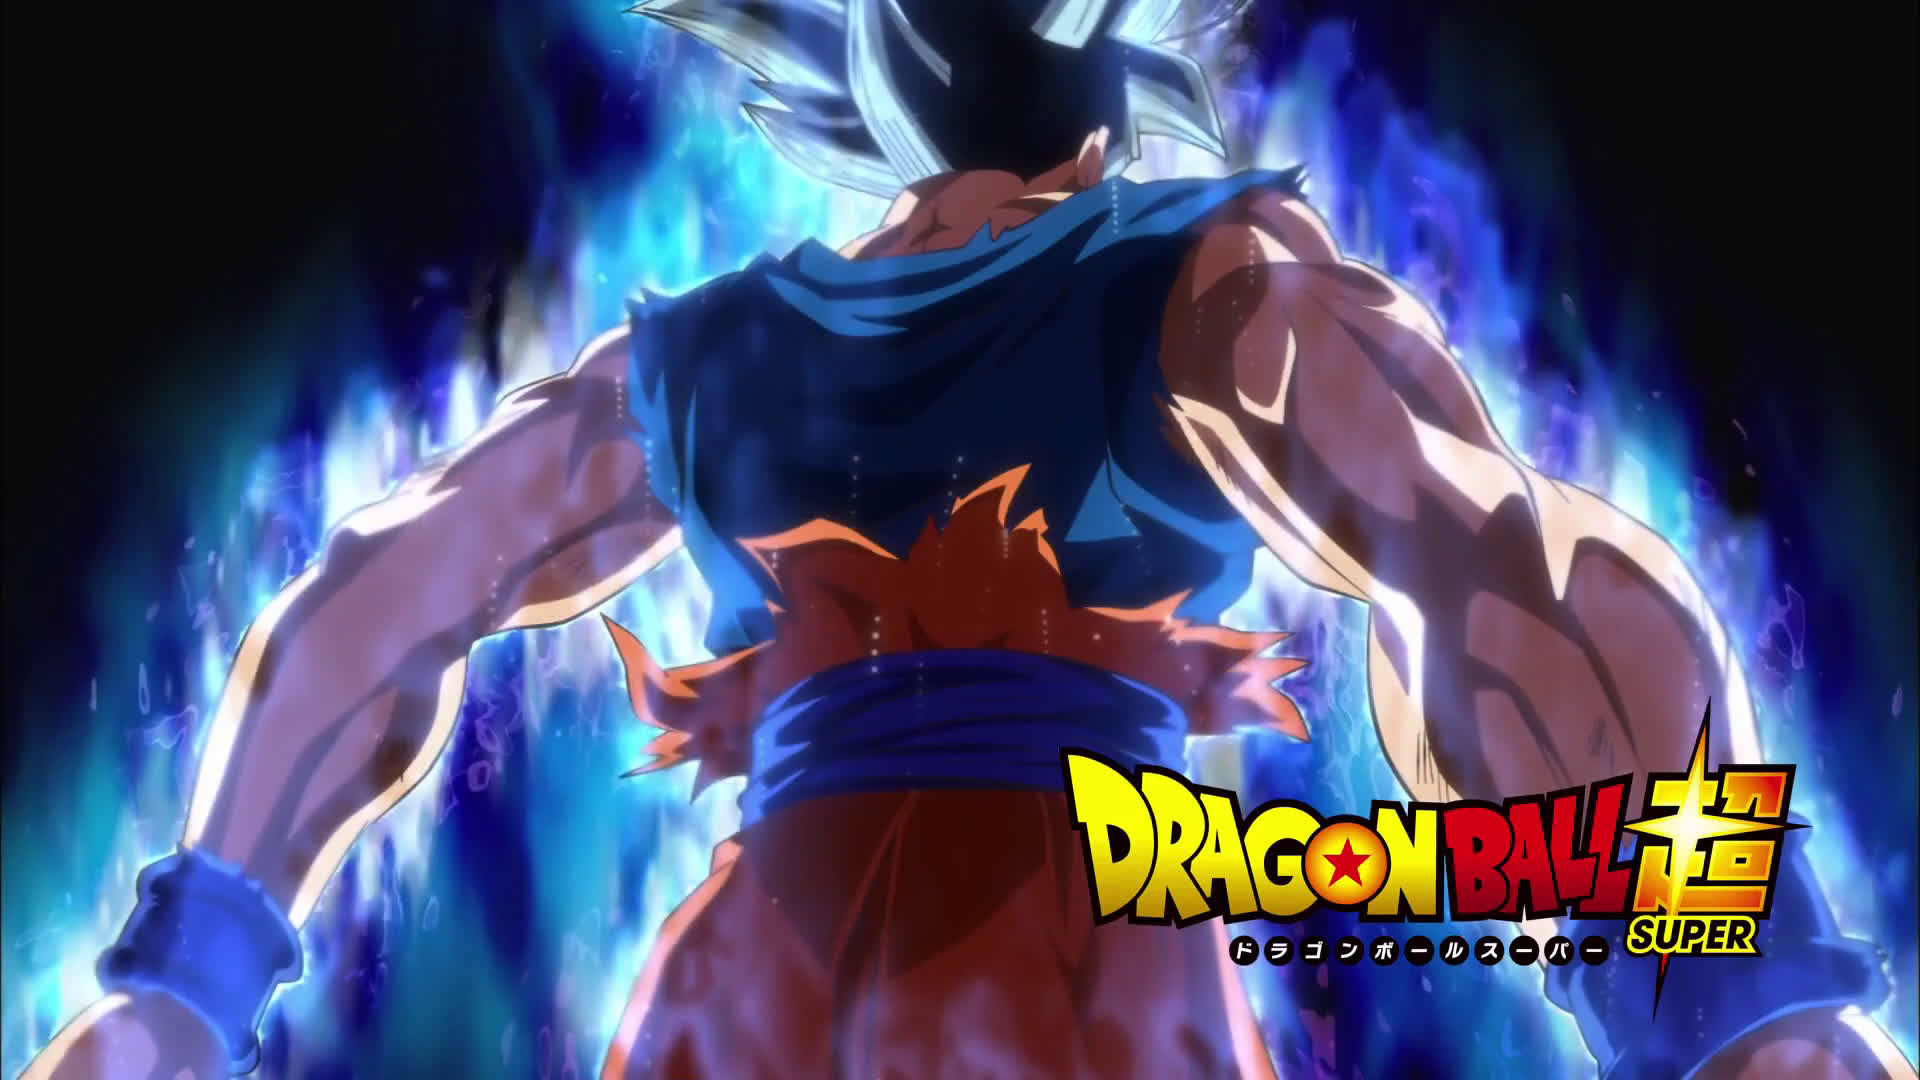 Goku Ultra Instinct Wallpaper! (Dragon Ball Super) by Miguexe on DeviantArt